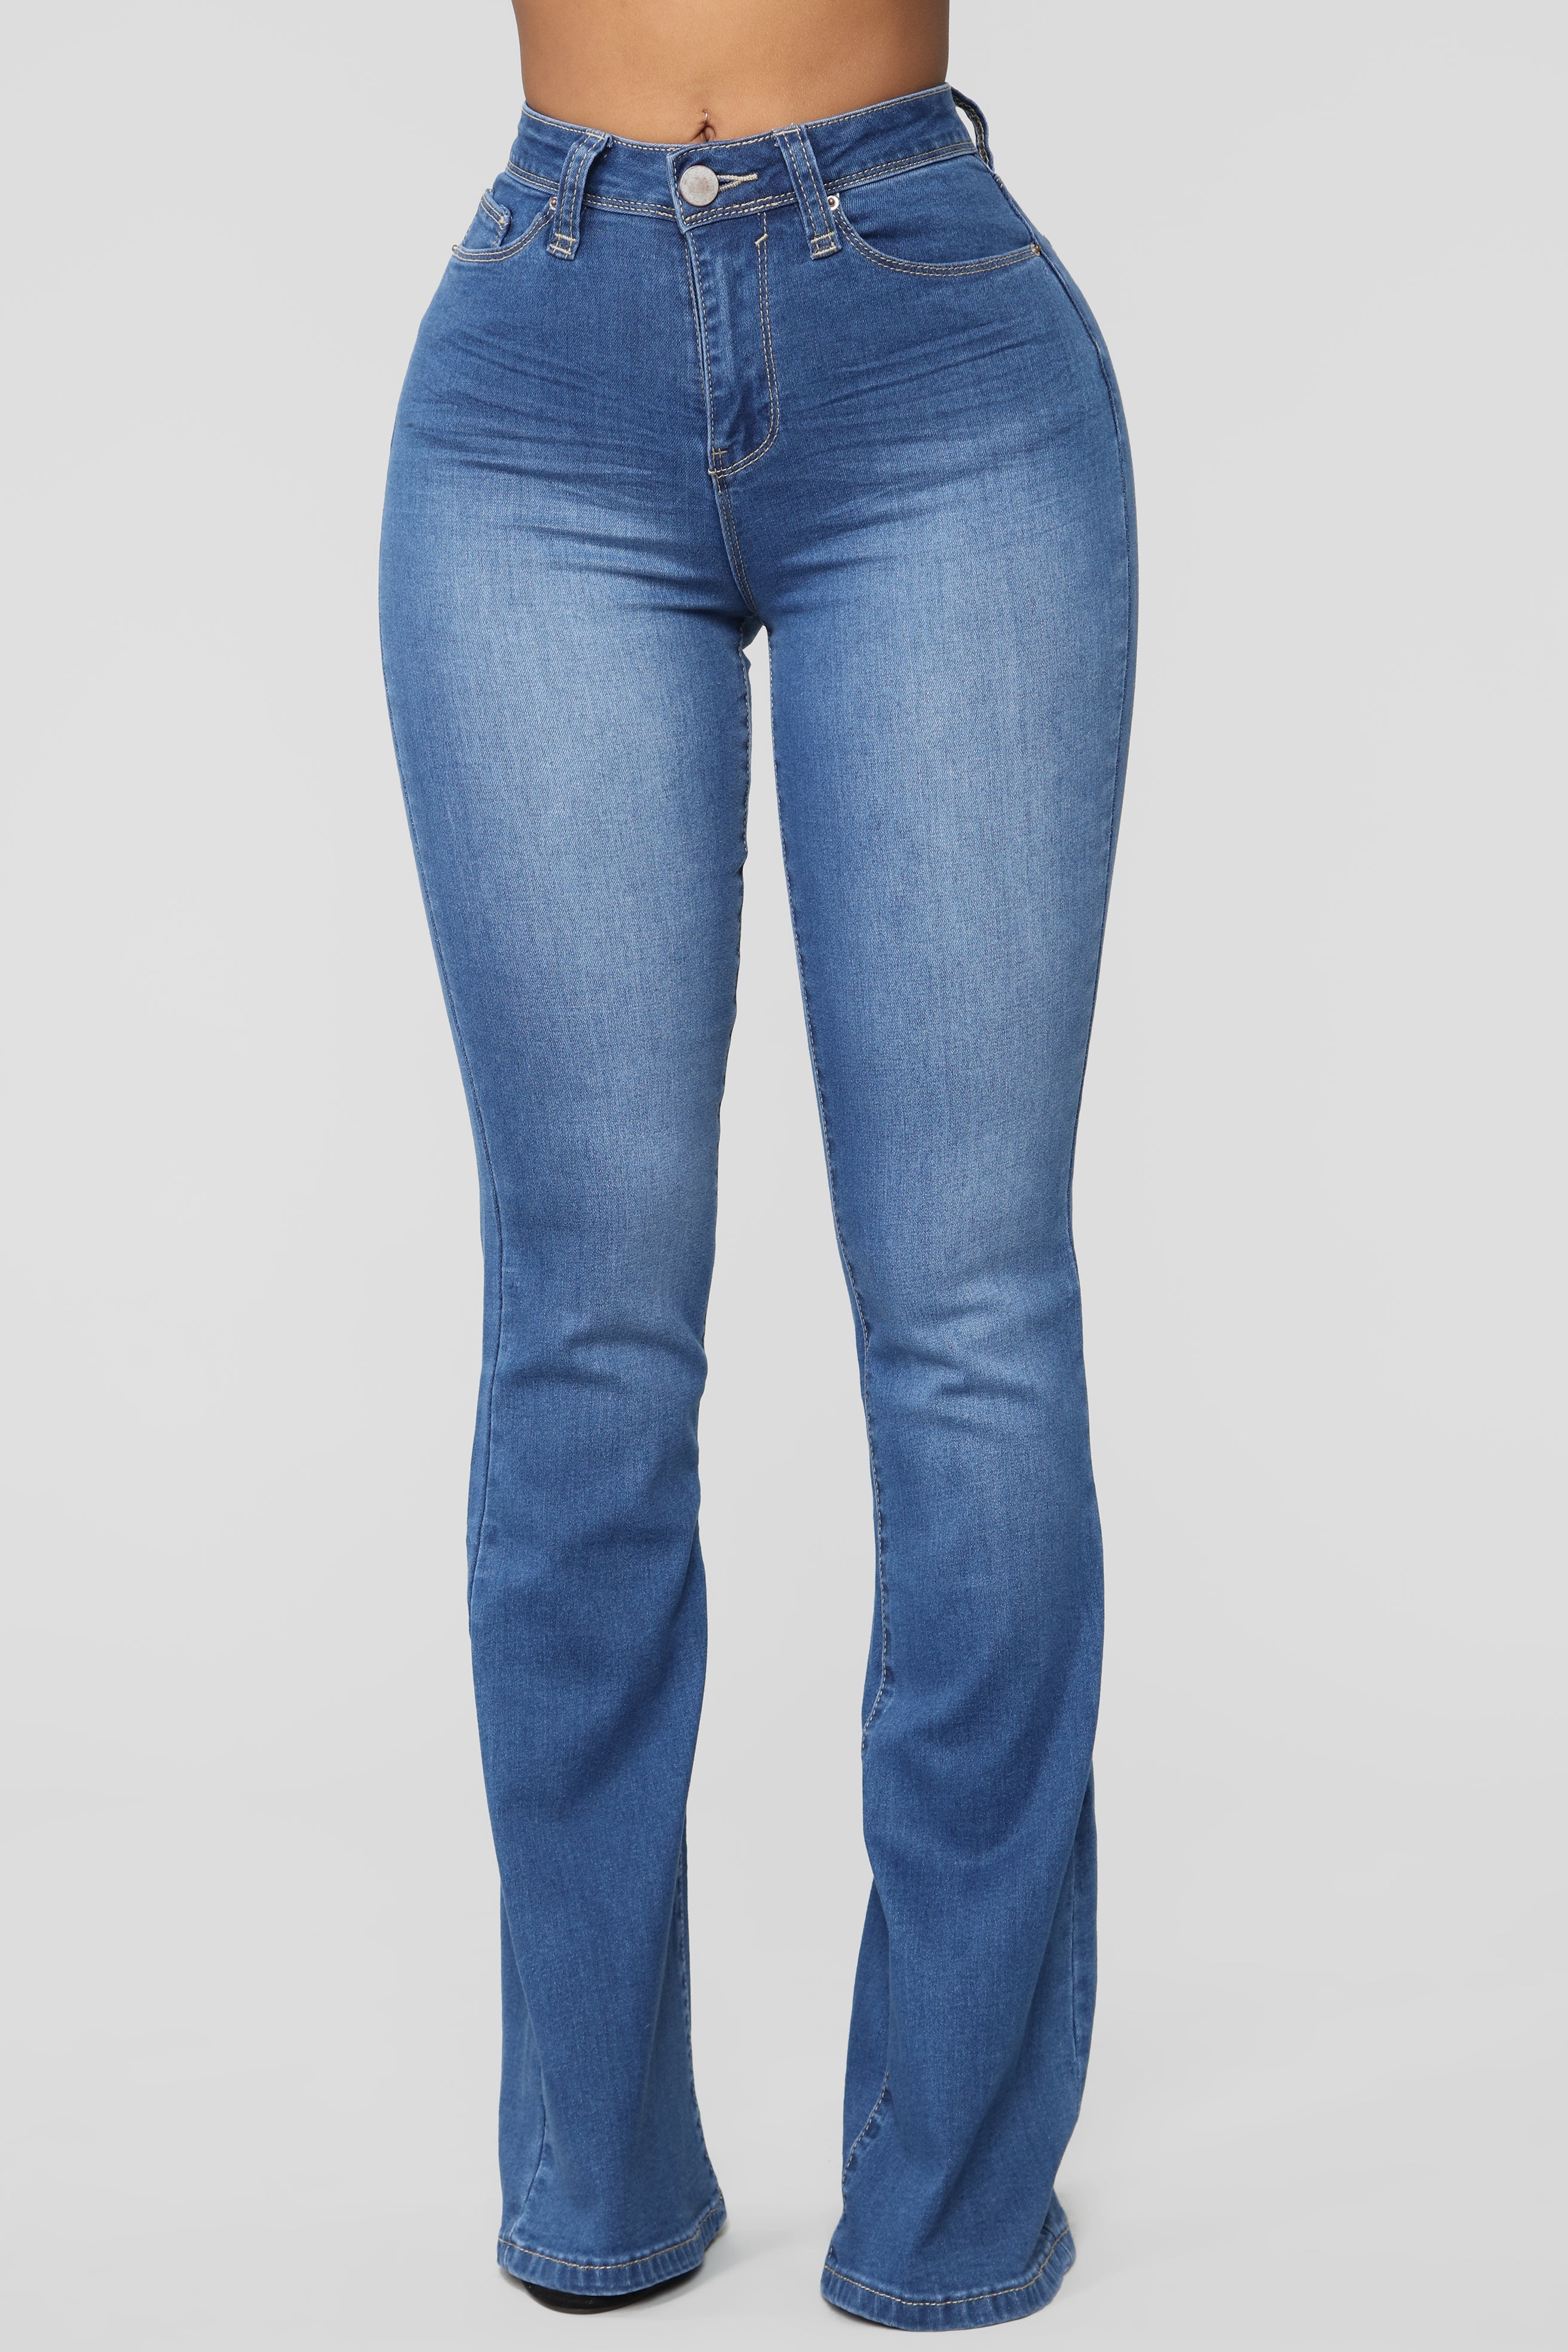 Jodie High Rise Flare Jeans - Medium Blue Wash – InsStreet